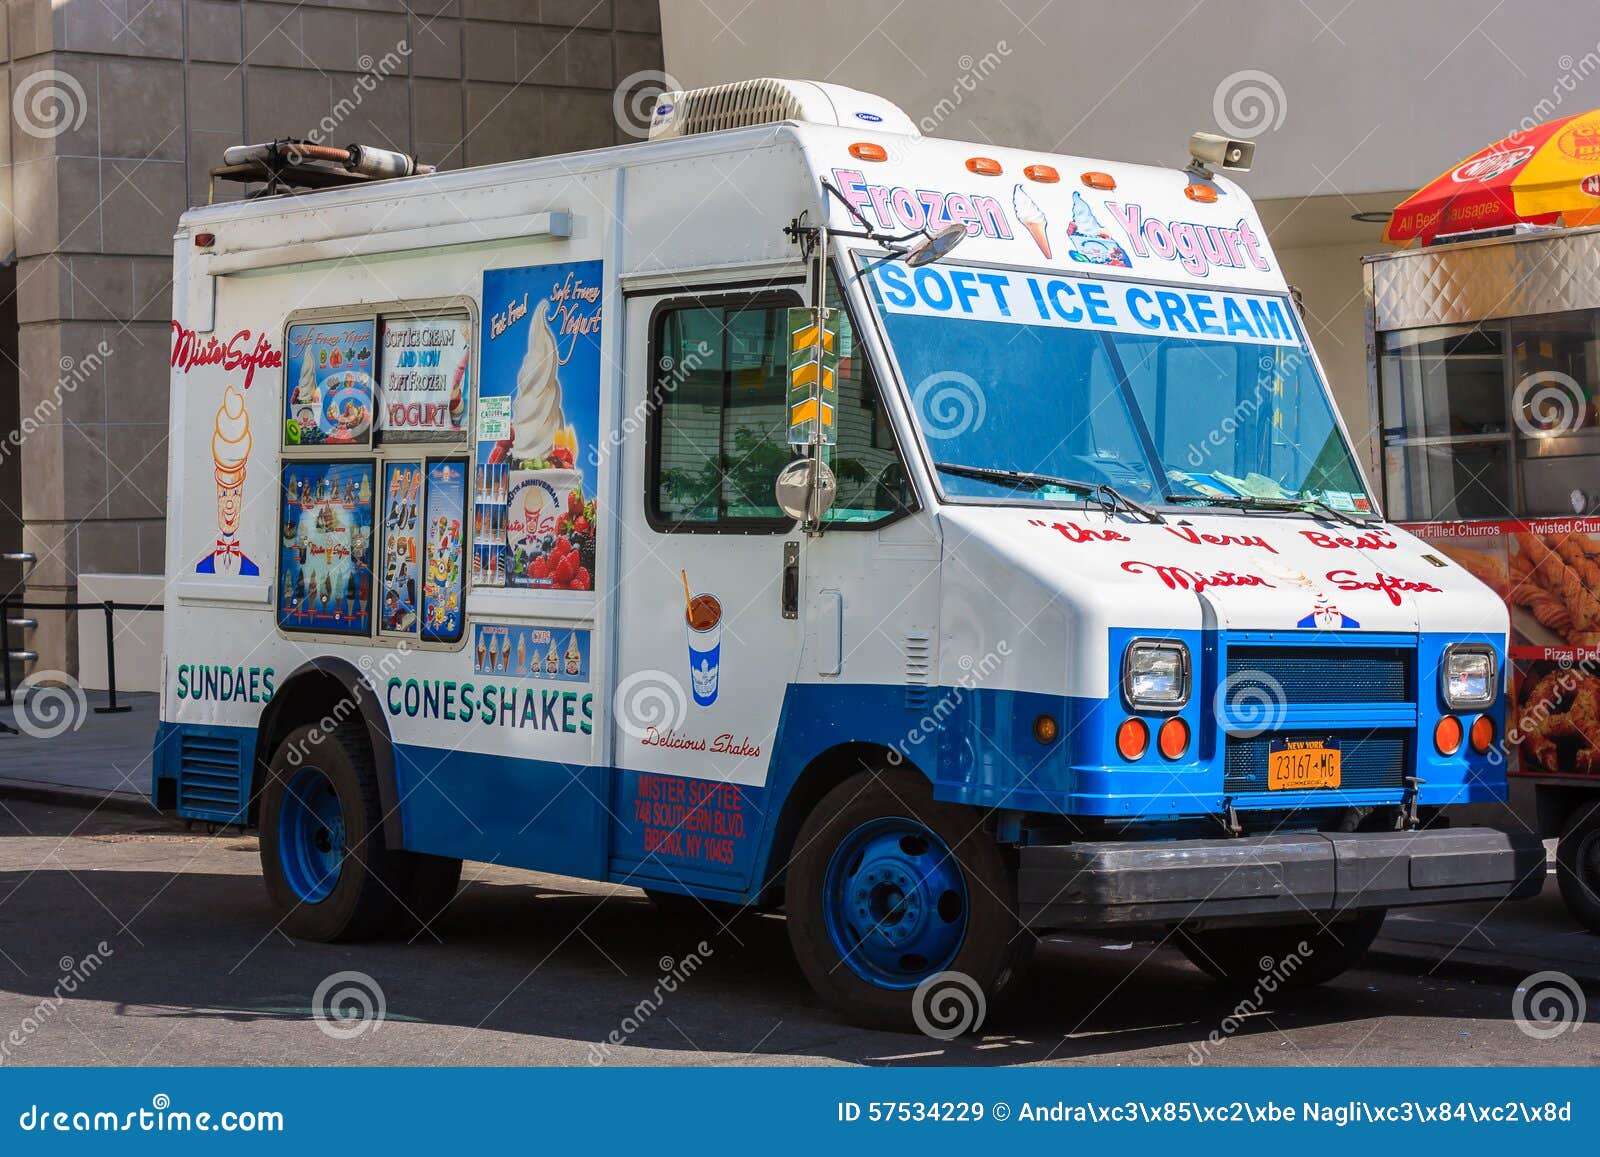 blue and cream vans